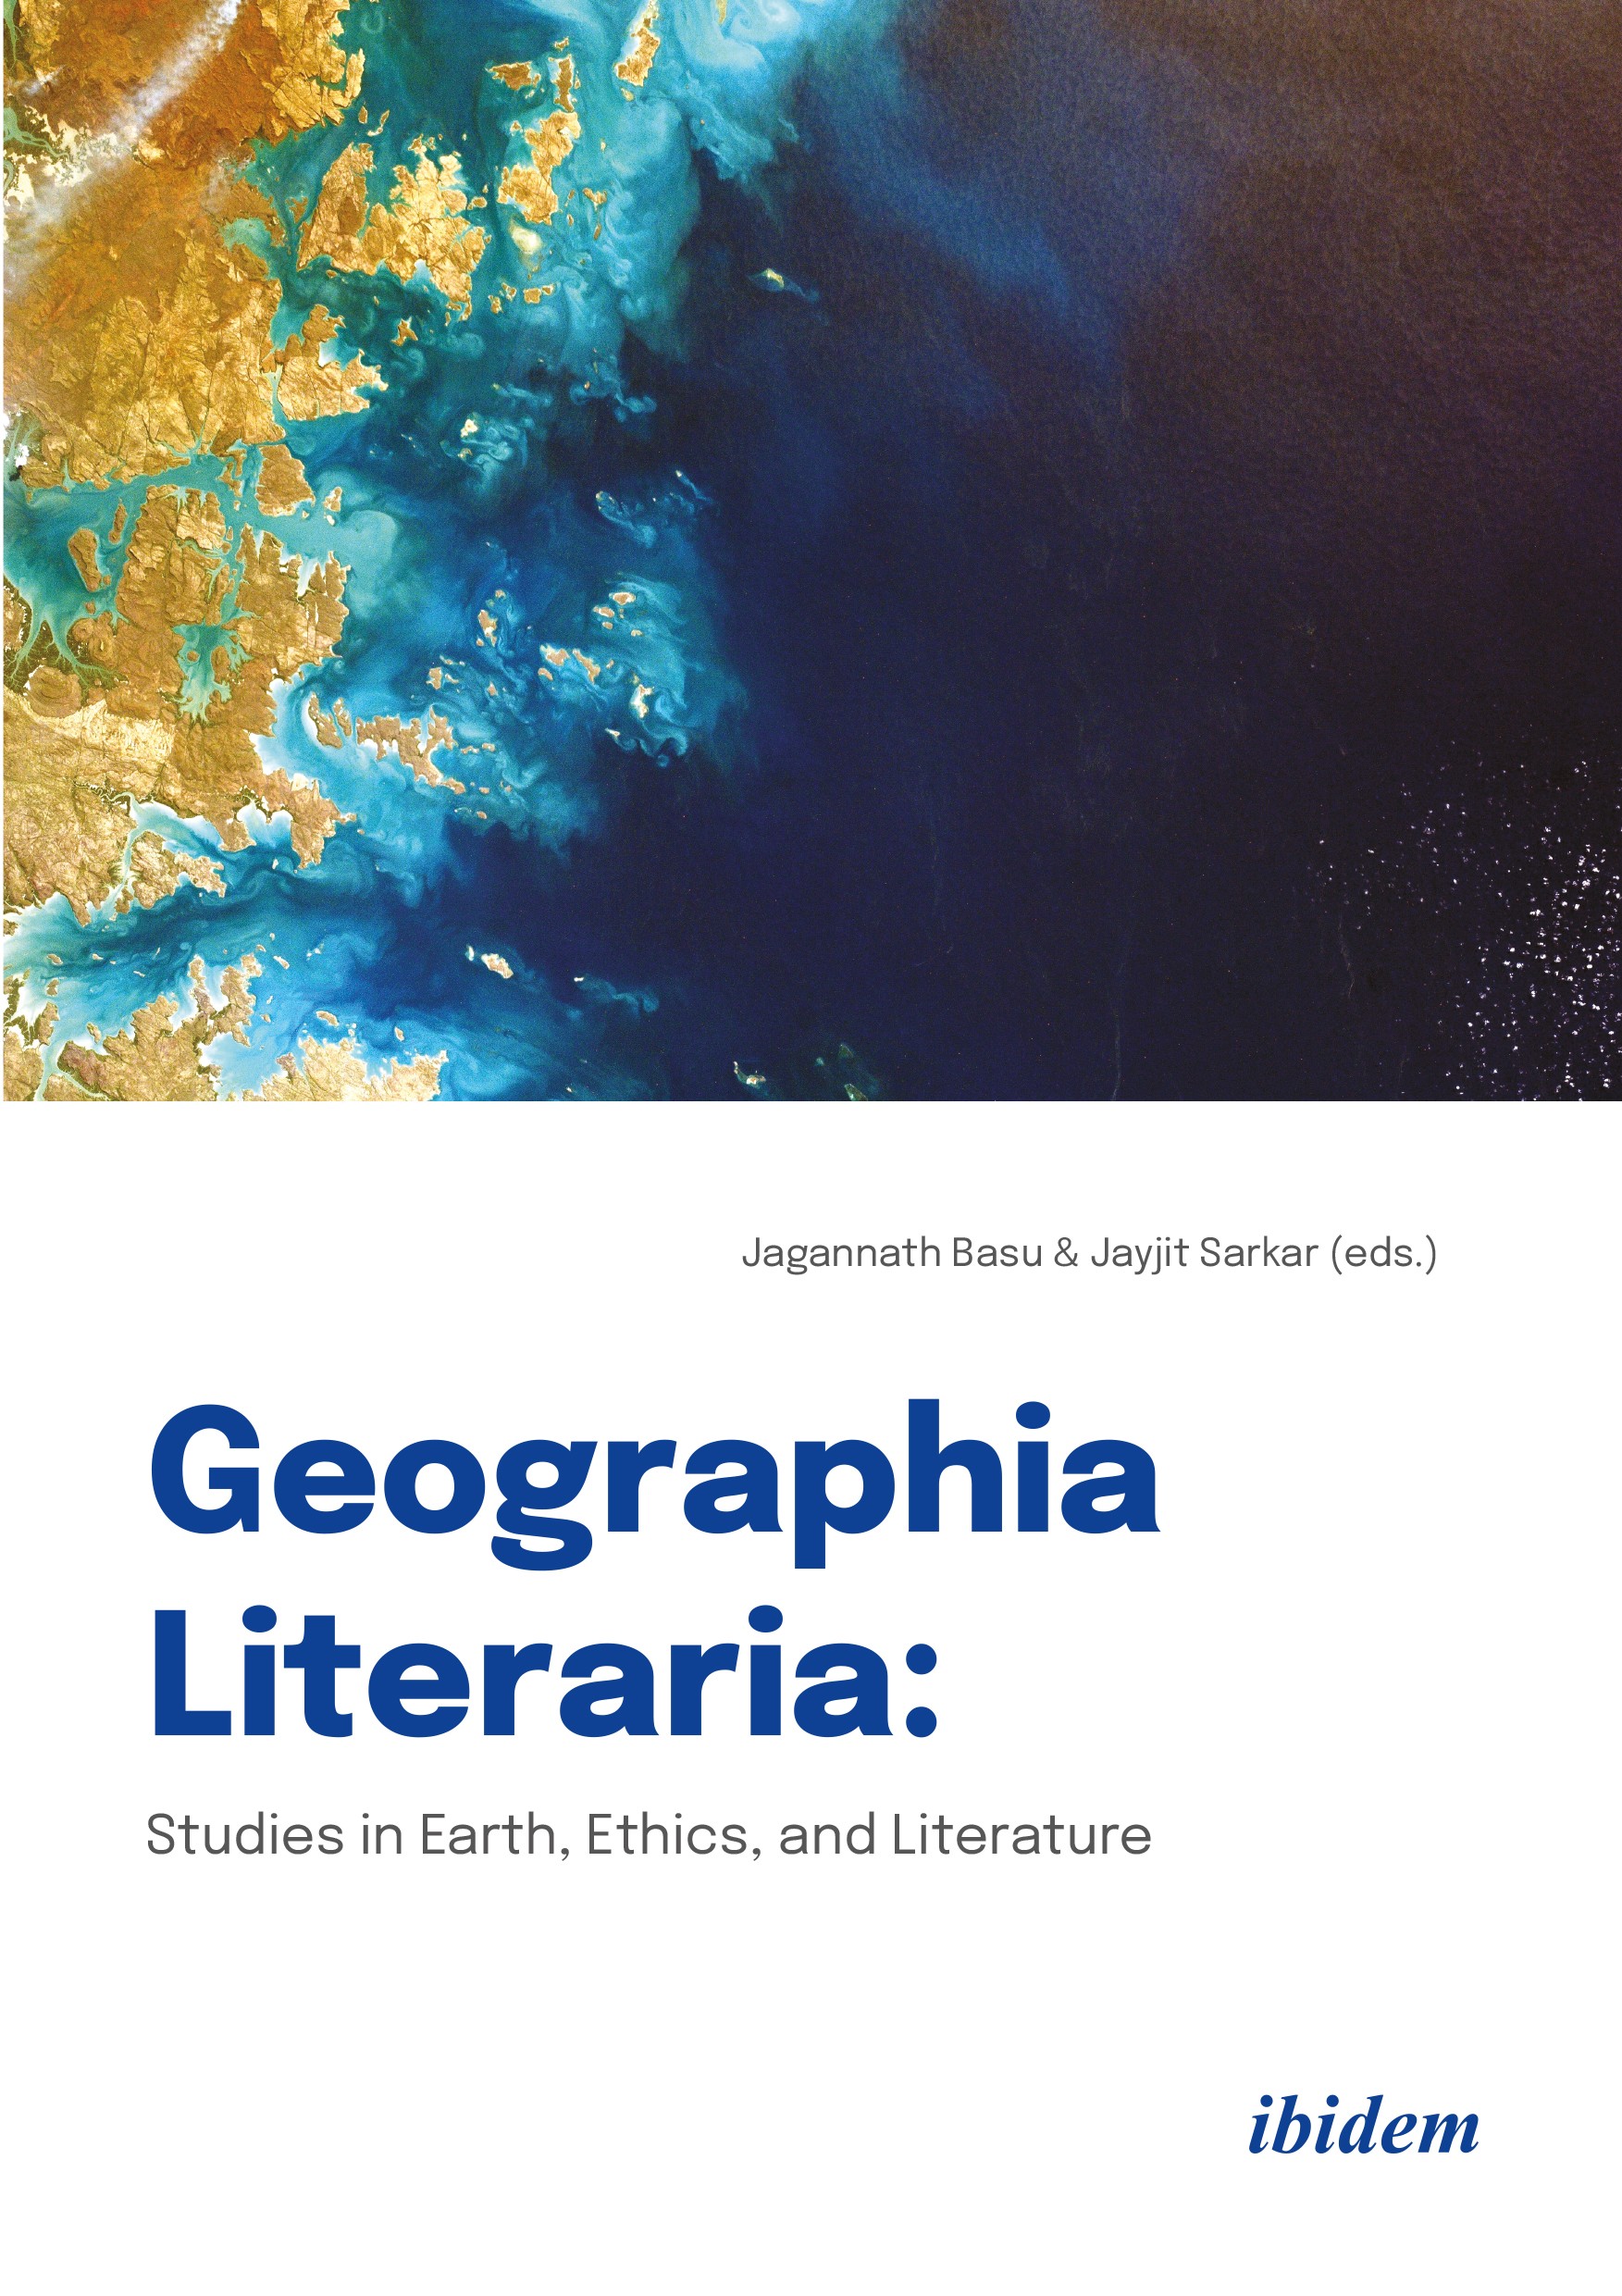 Geographia Literaria: Studies in Earth, Ethics, and Literature